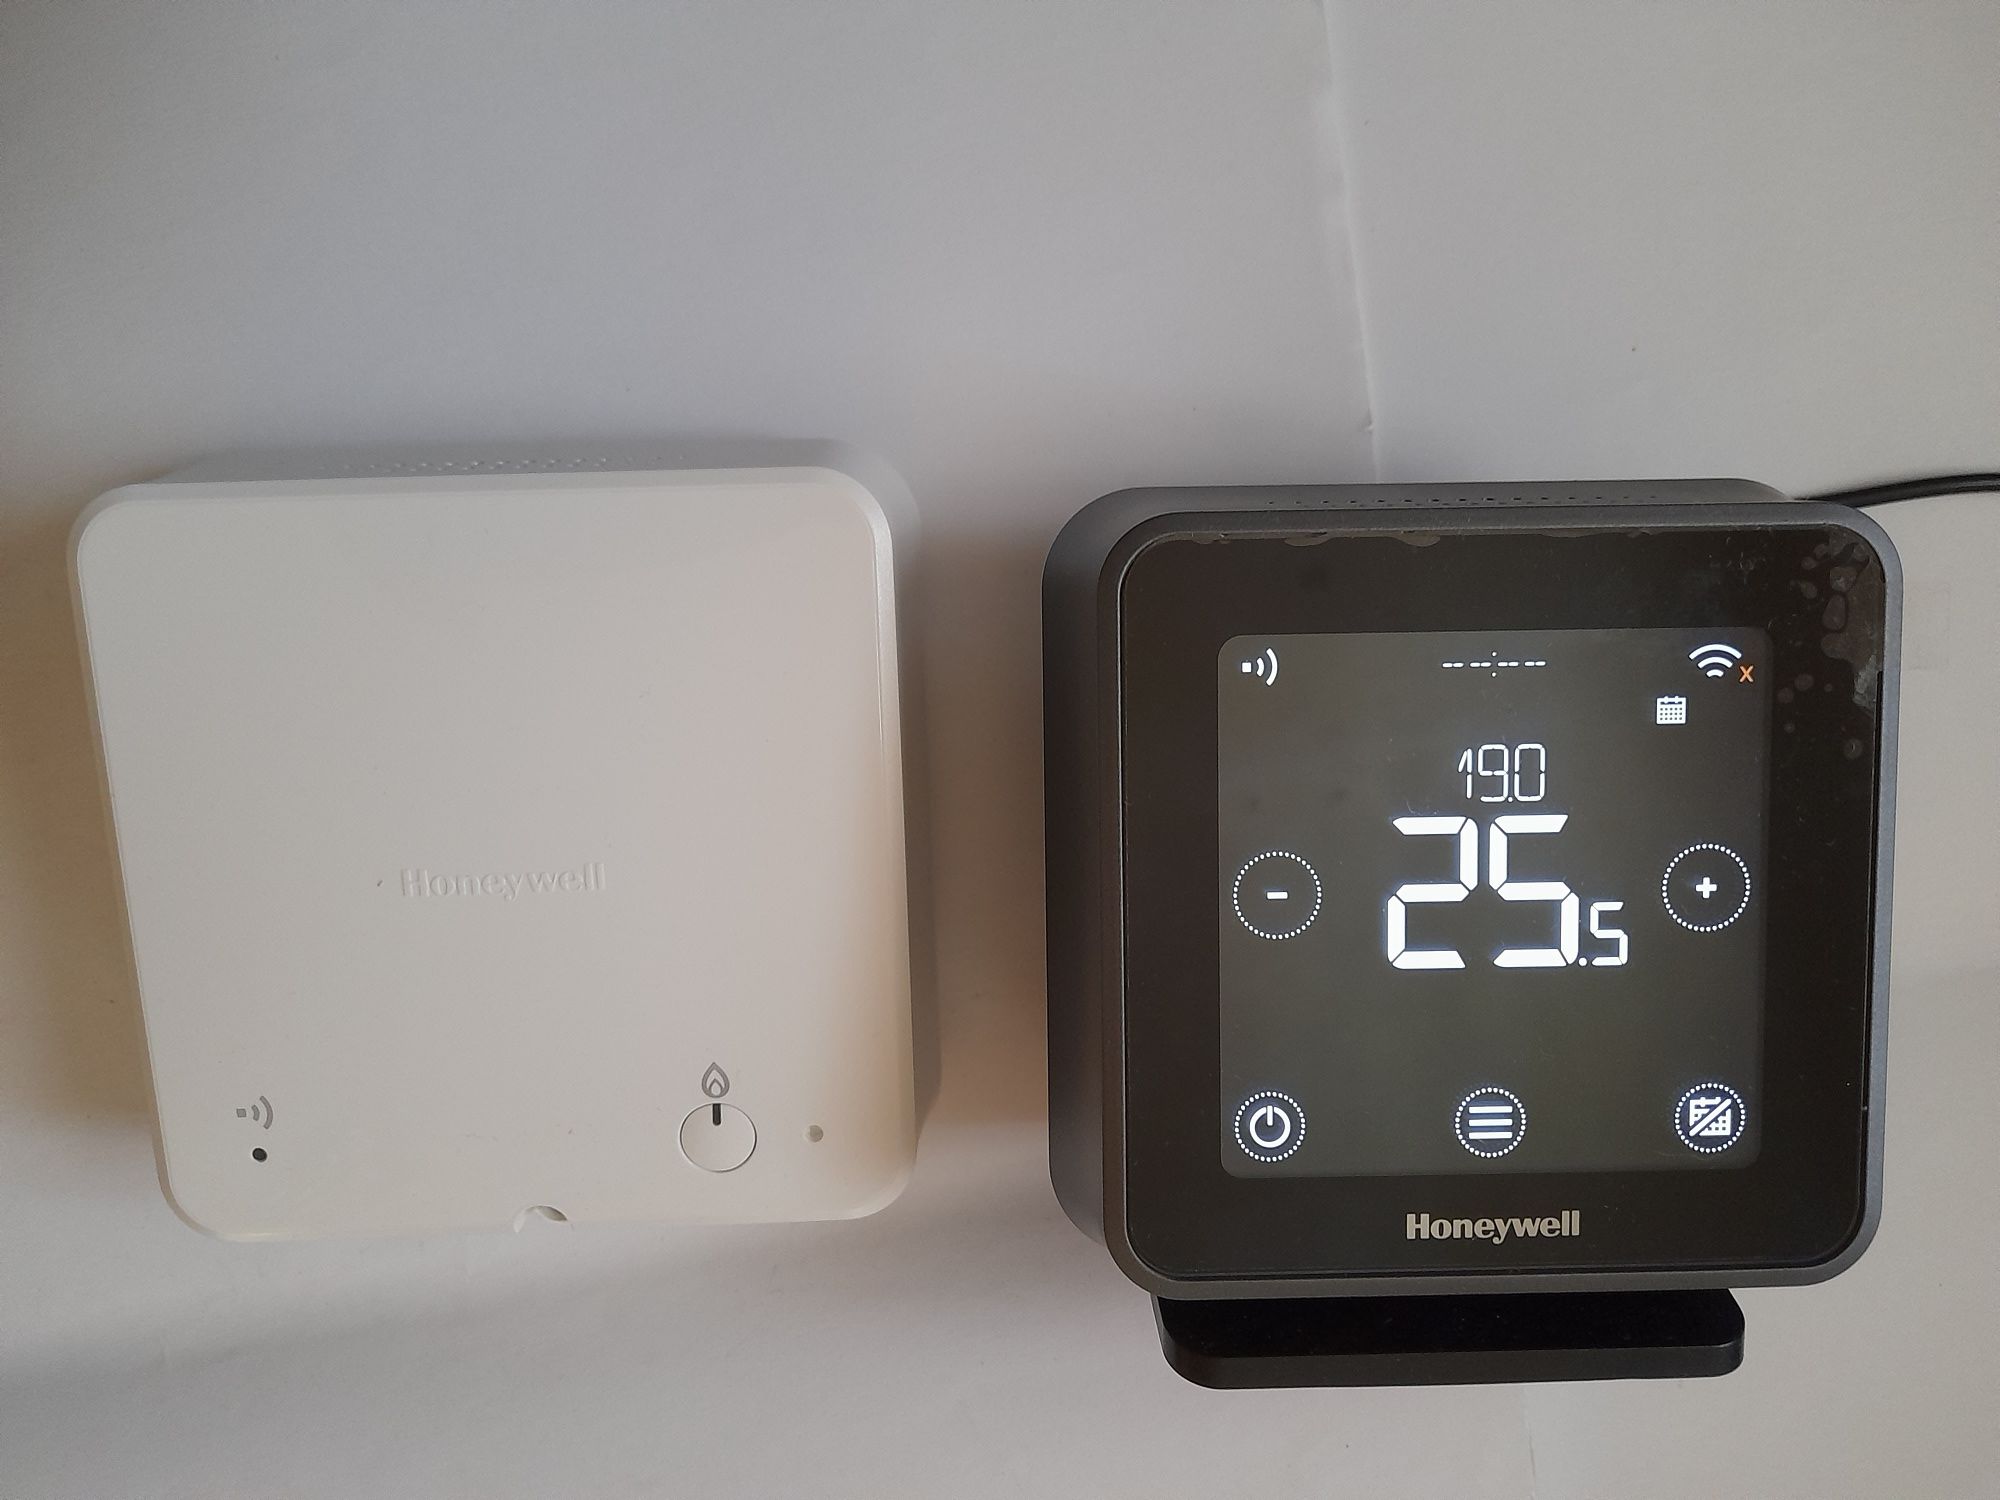 Honeywell T6R Wireless Smart Thermostat розумний термостат